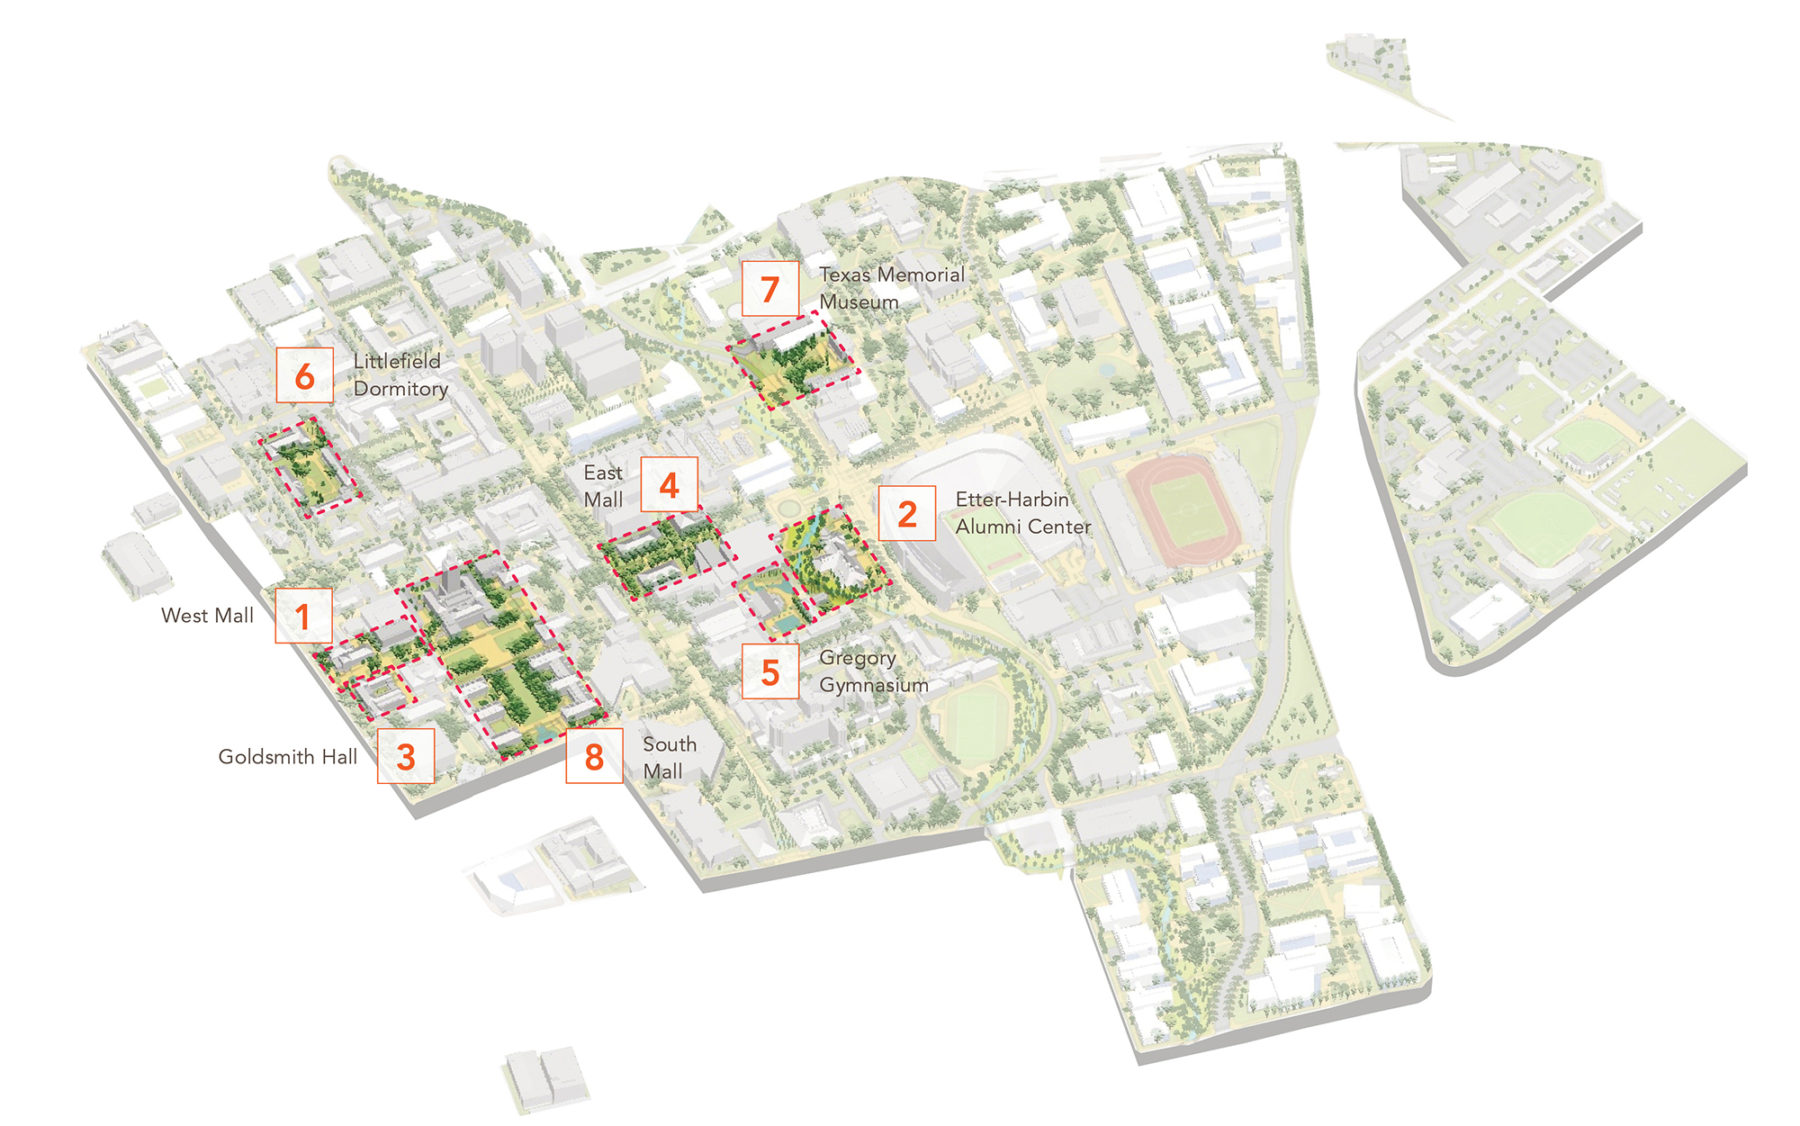 Aerial rendering of campus highting major site features